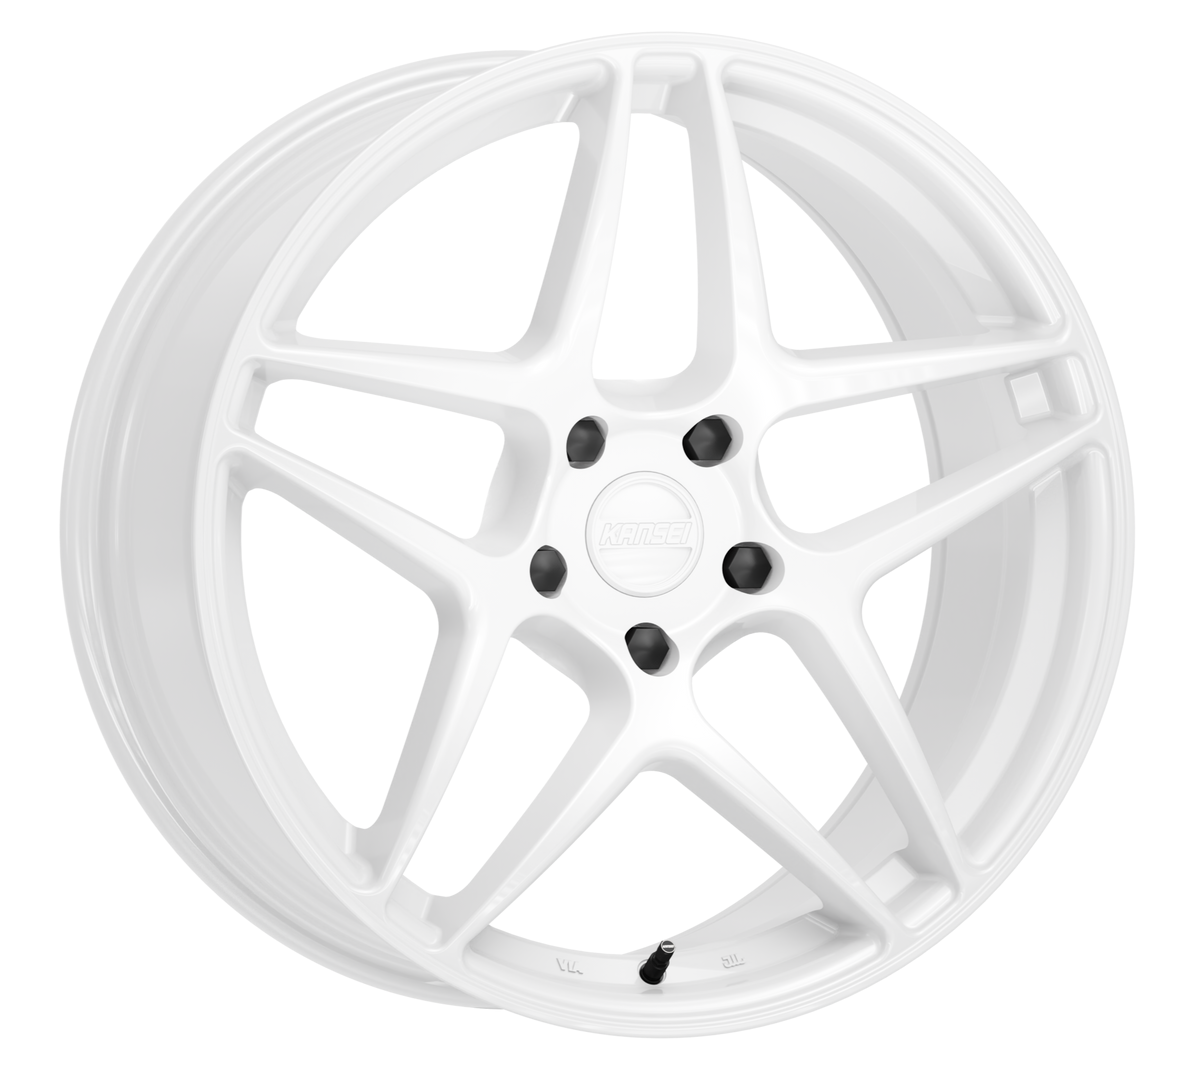 K15W ASTRO Wheel, Size: 19" x 8.50", Bolt Pattern: 5 x 120 mm, Backspace: 6.13" [Finish: Gloss White]